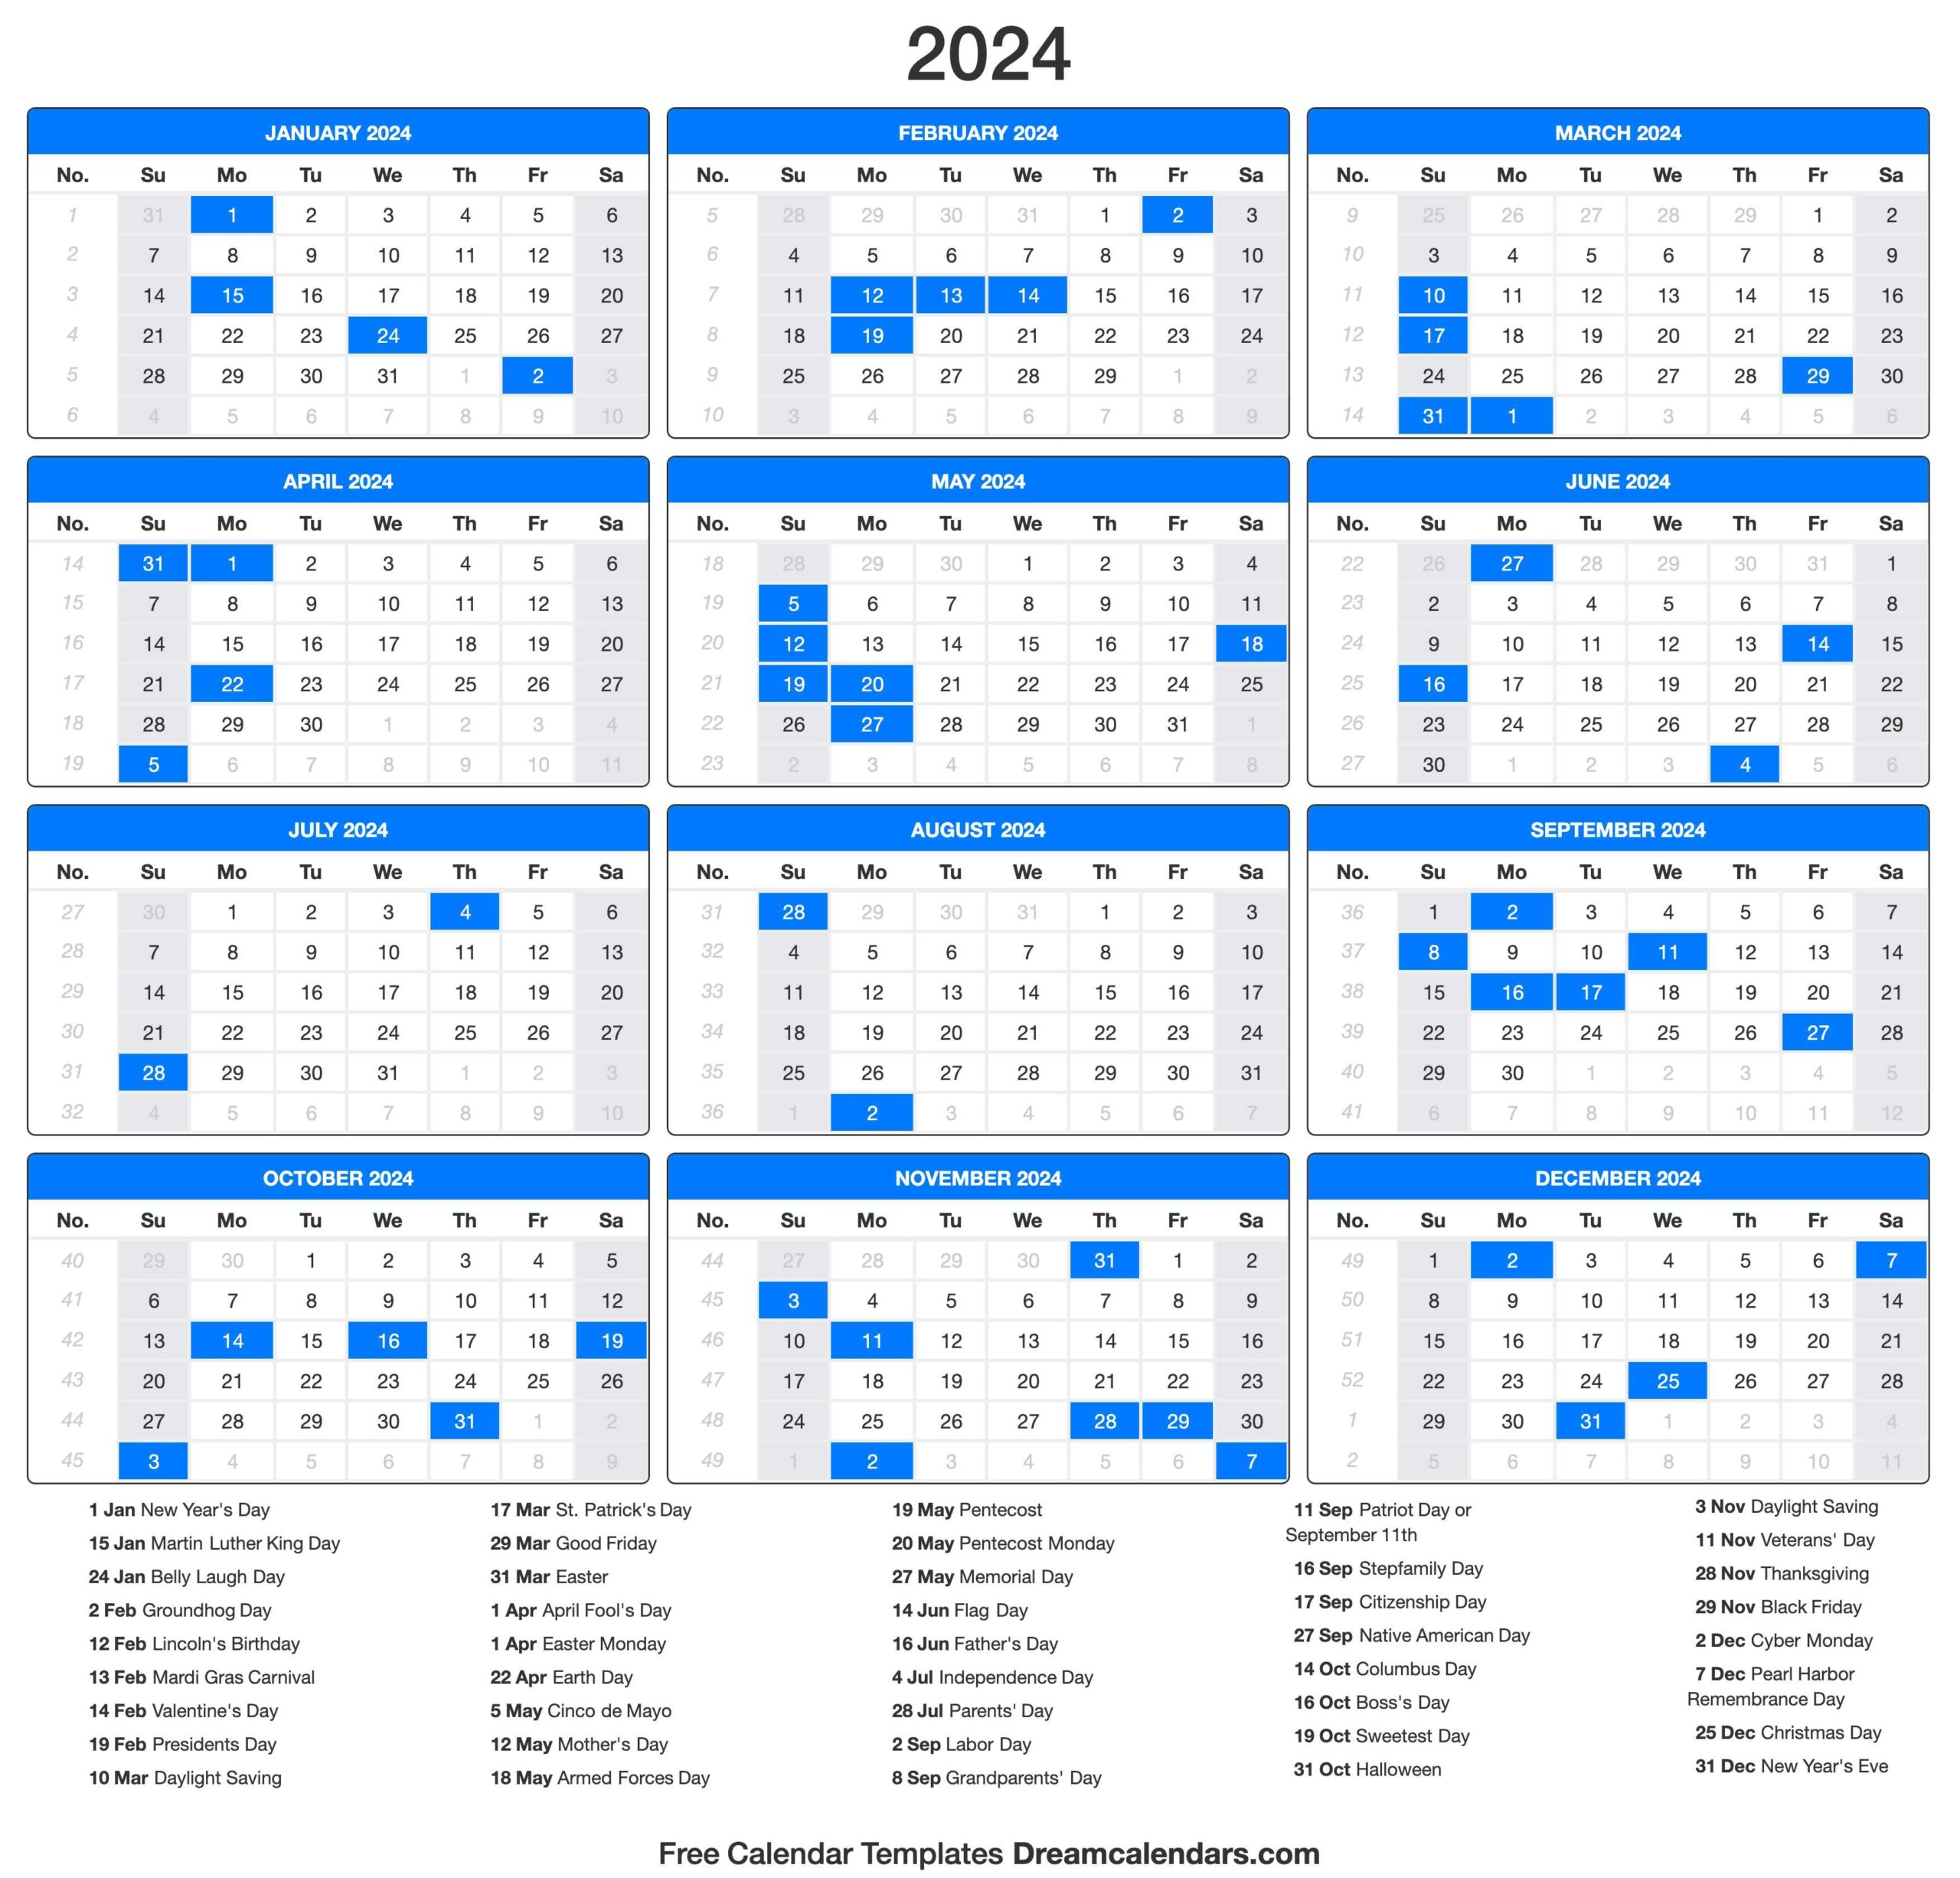 2024 Calendar - Free Printable 2024 Calendar Template With Holidays